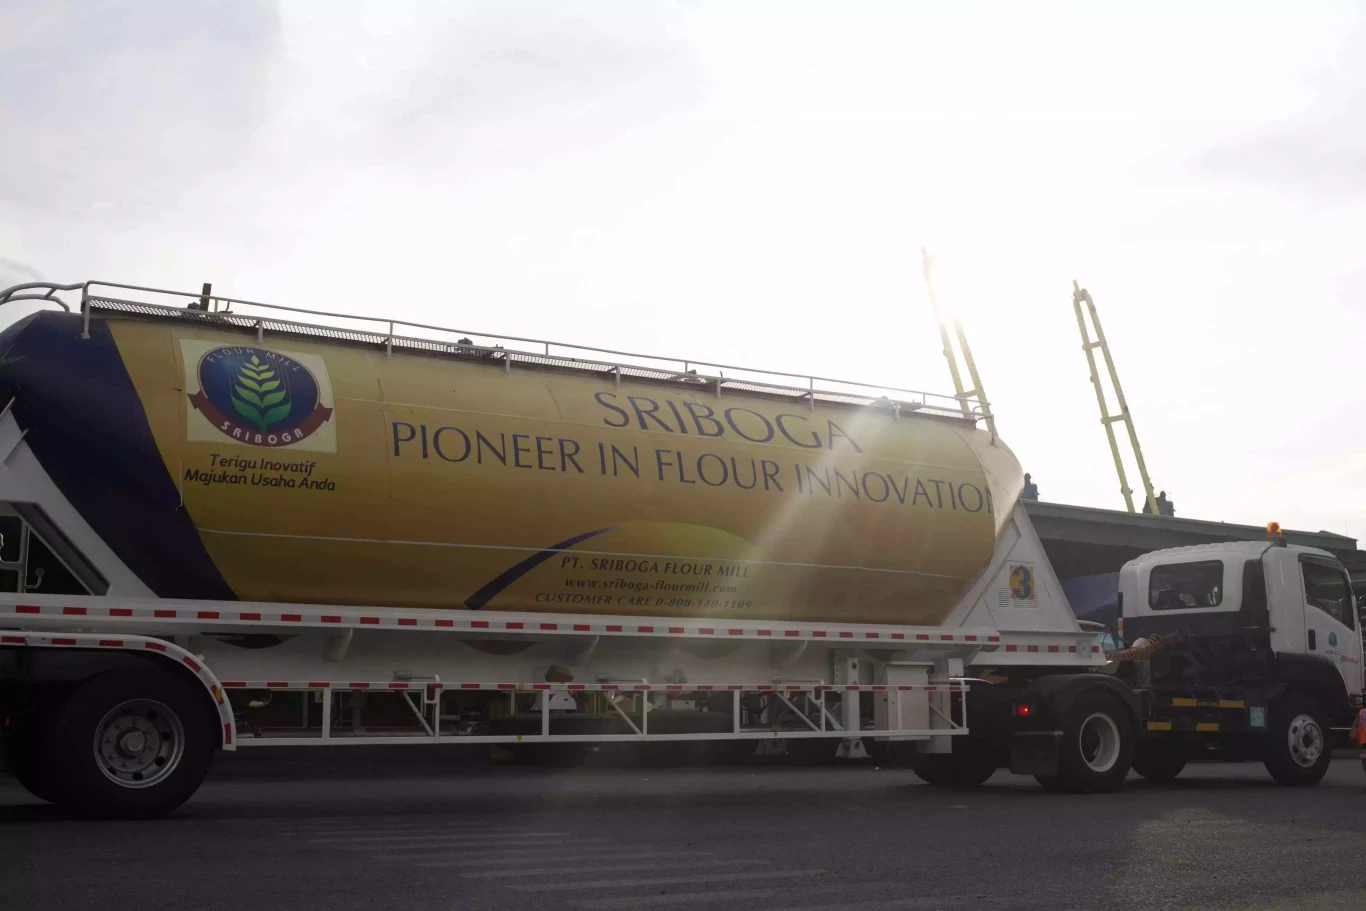 PT Sriboga Flour Mill provides bulk delivery system for B2B customers